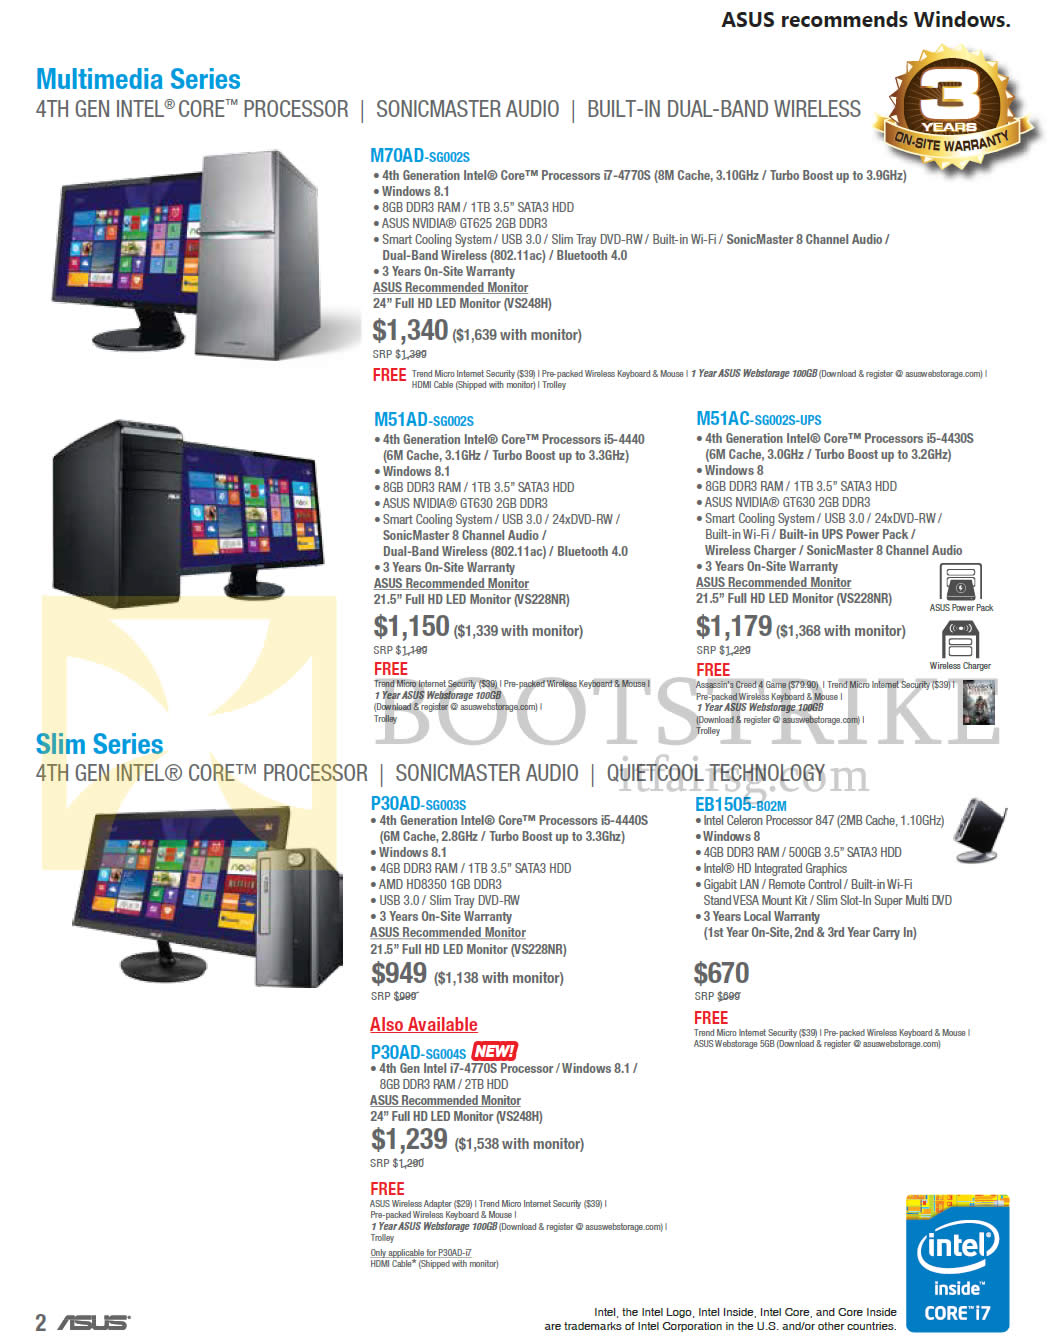 PC SHOW 2014 price list image brochure of ASUS Desktop PCs M70AD-SG0002S, M51AD-SG002S, M51AC-SG002S-UPS, P30AD-SG003S, EB1505-B02M, P30AD-SG004S